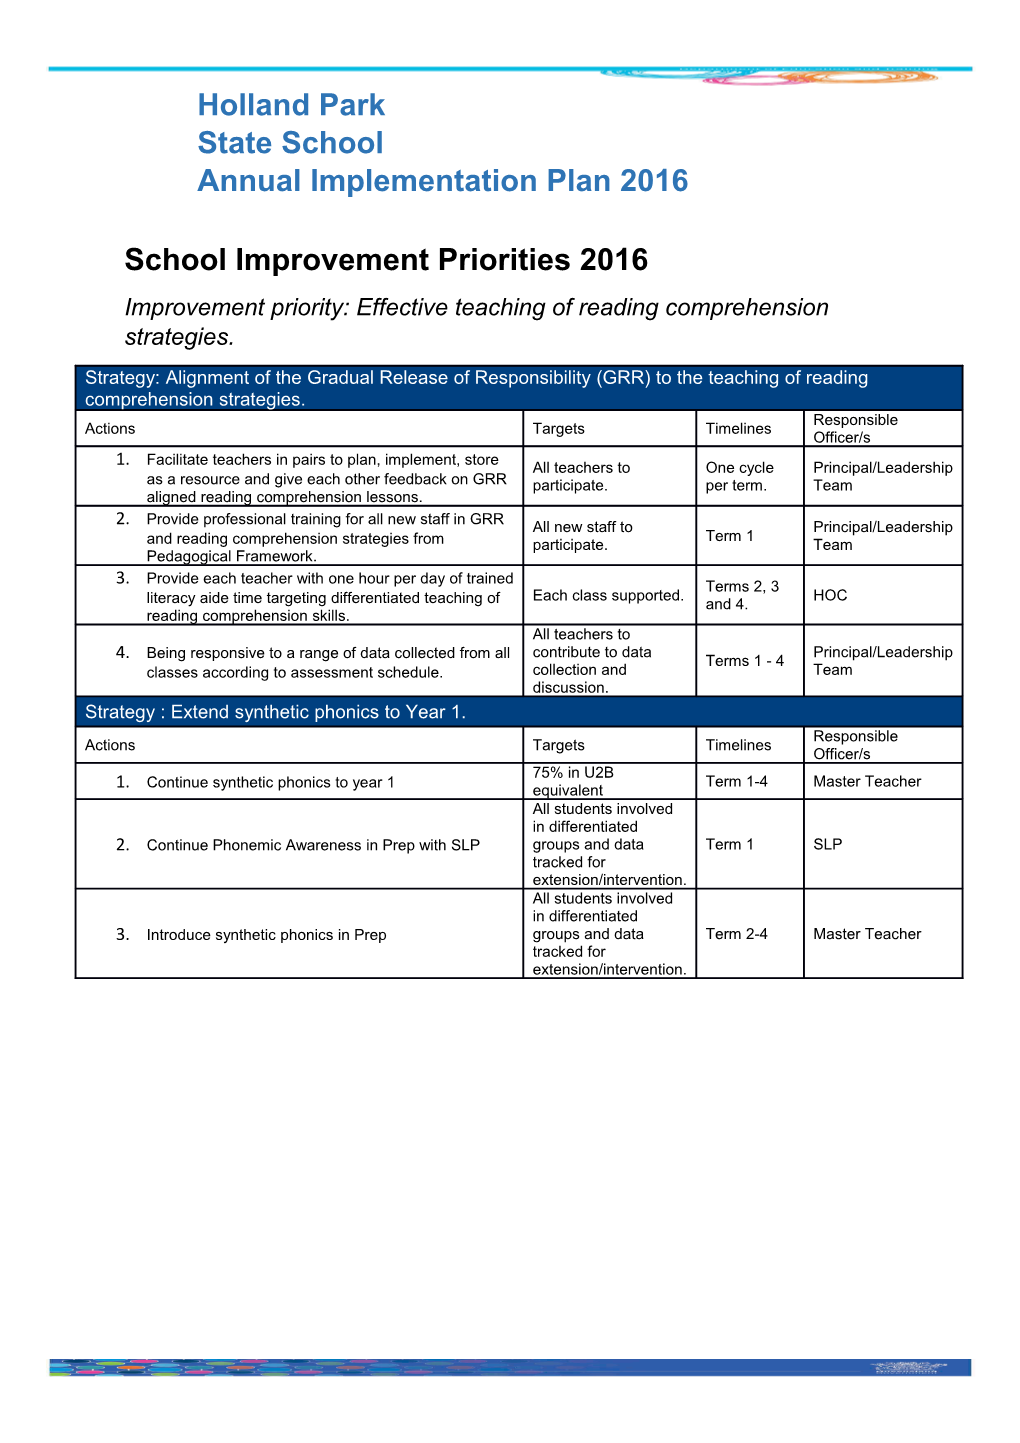 HPSS Annual Implementation Plan 2016